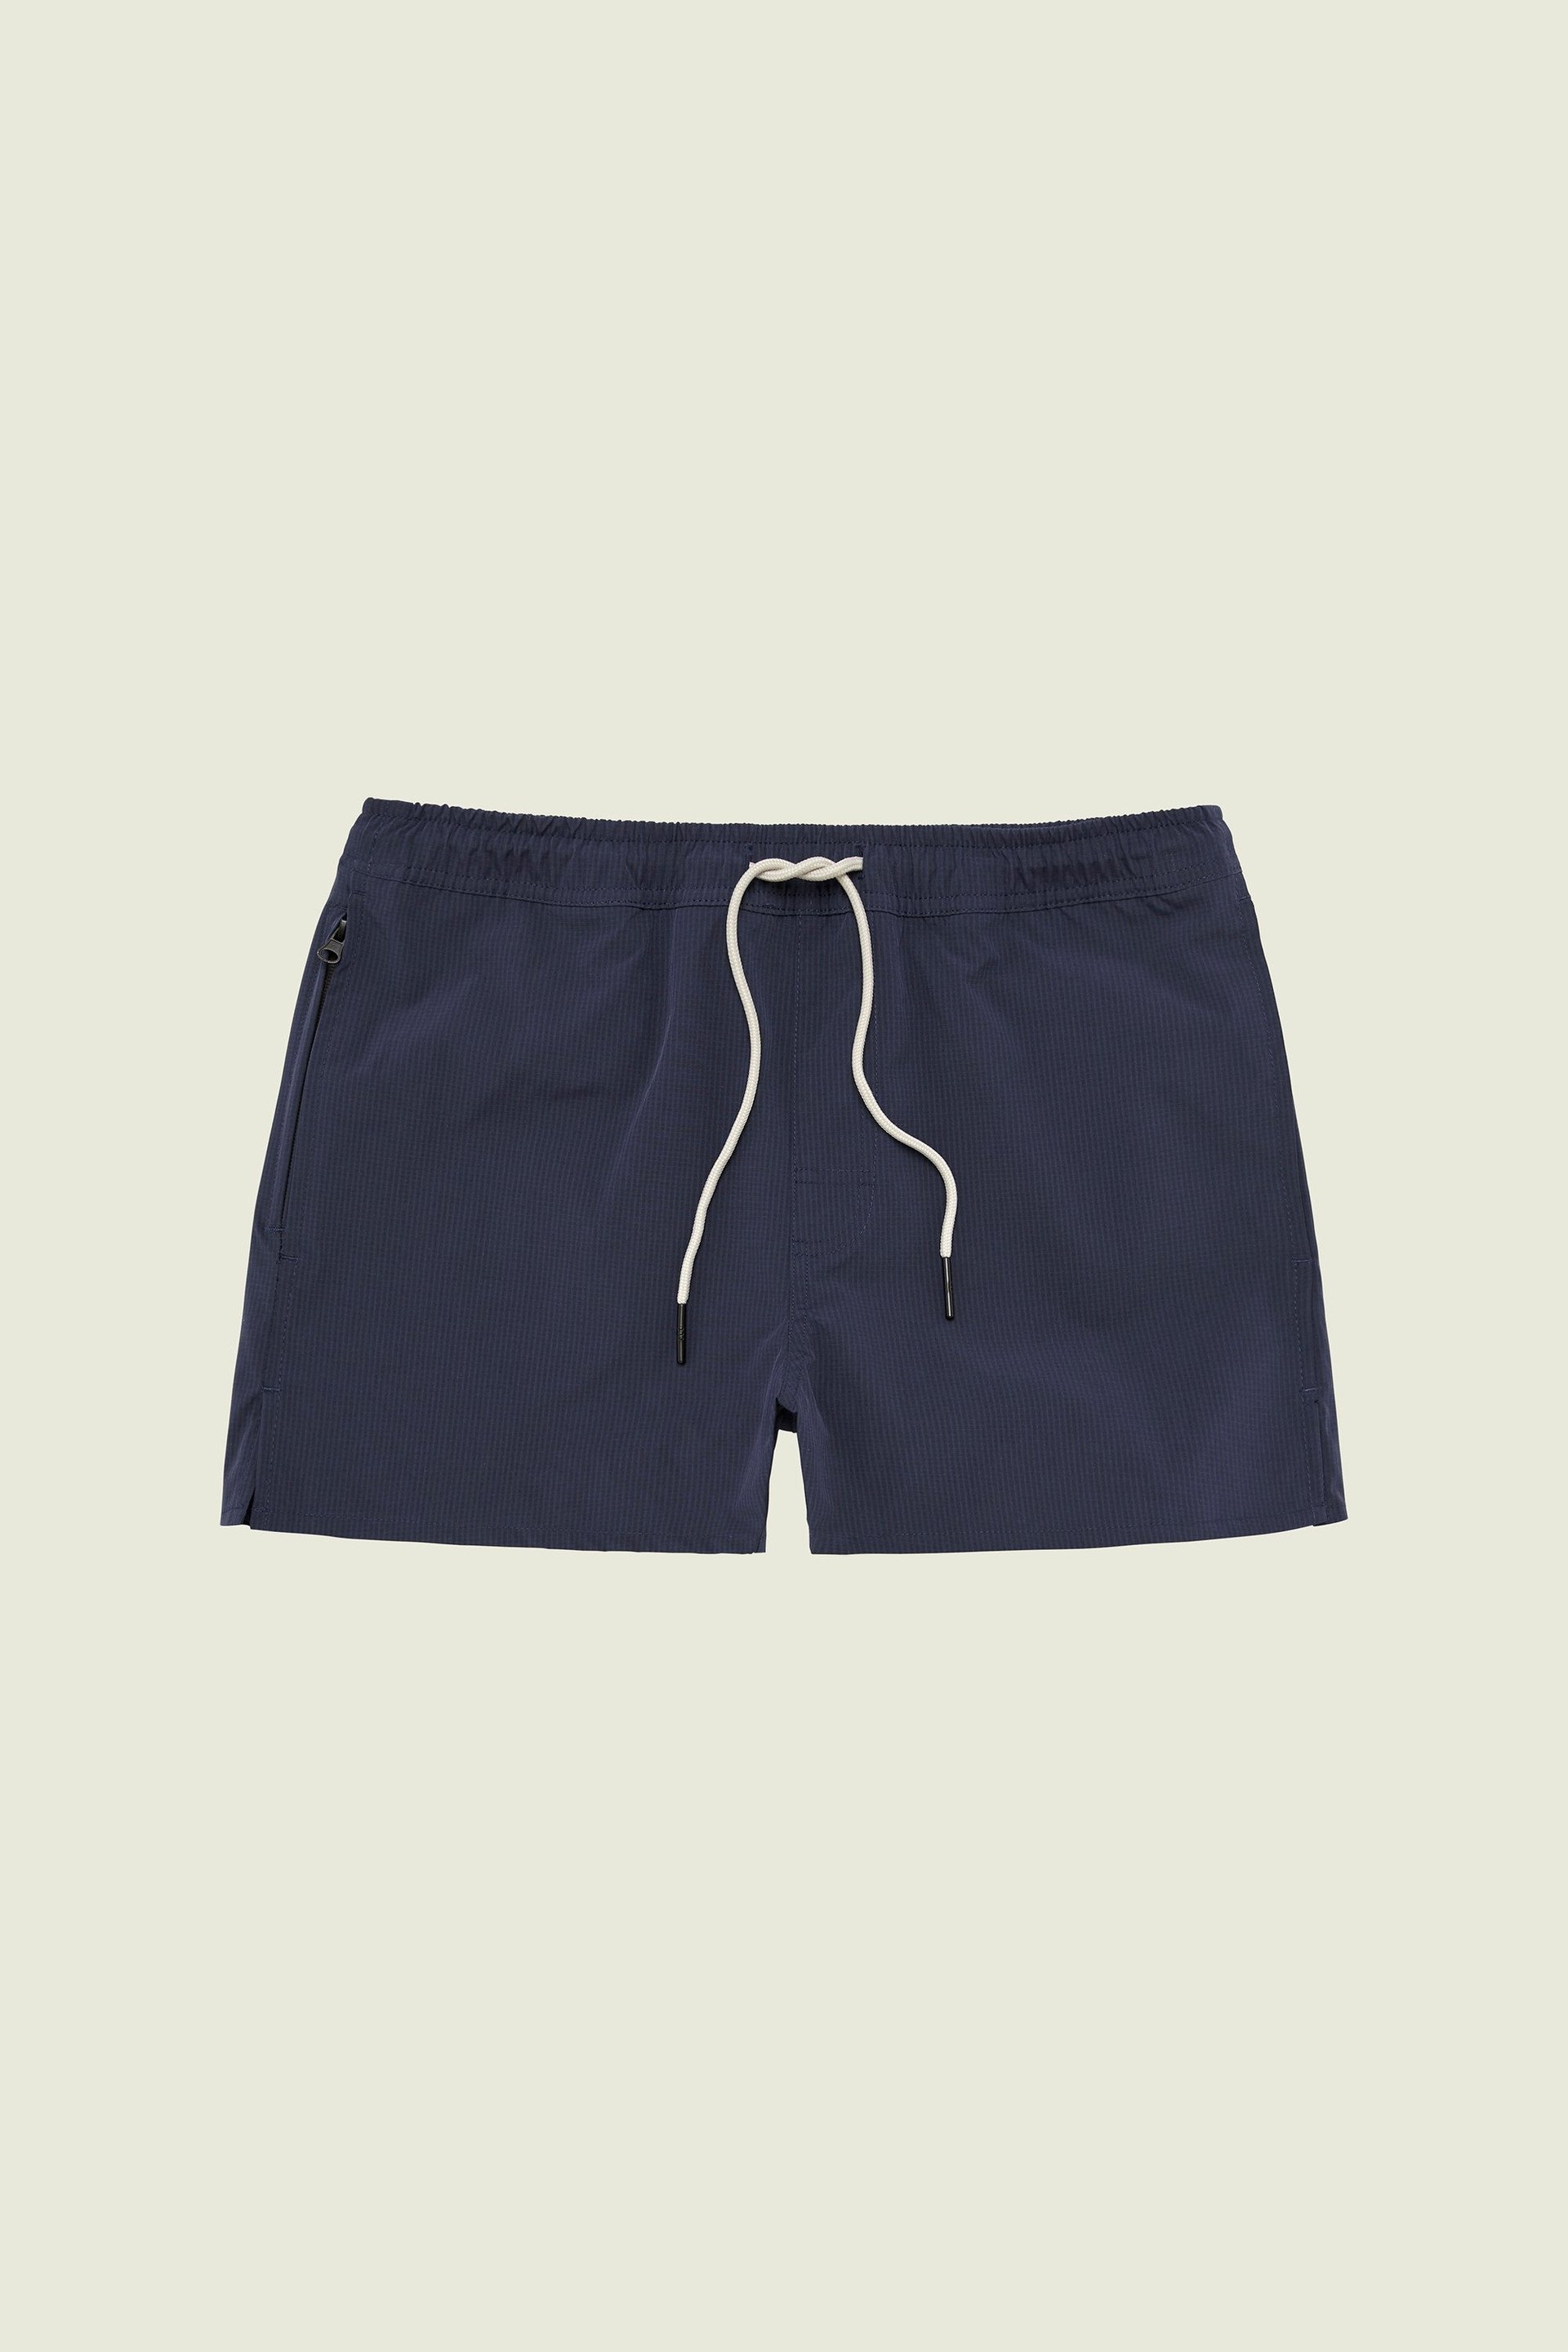 Azurite Calo Swim Shorts